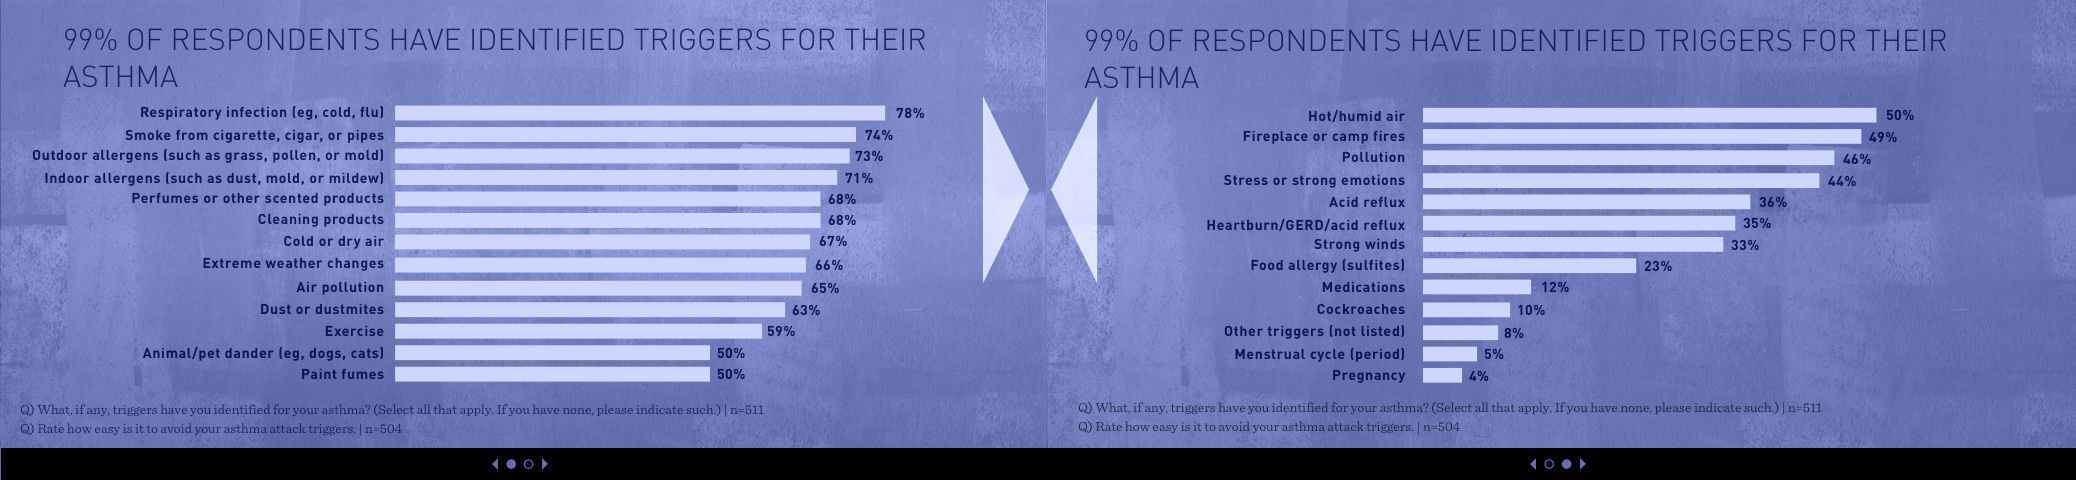 Asthma in America 2016